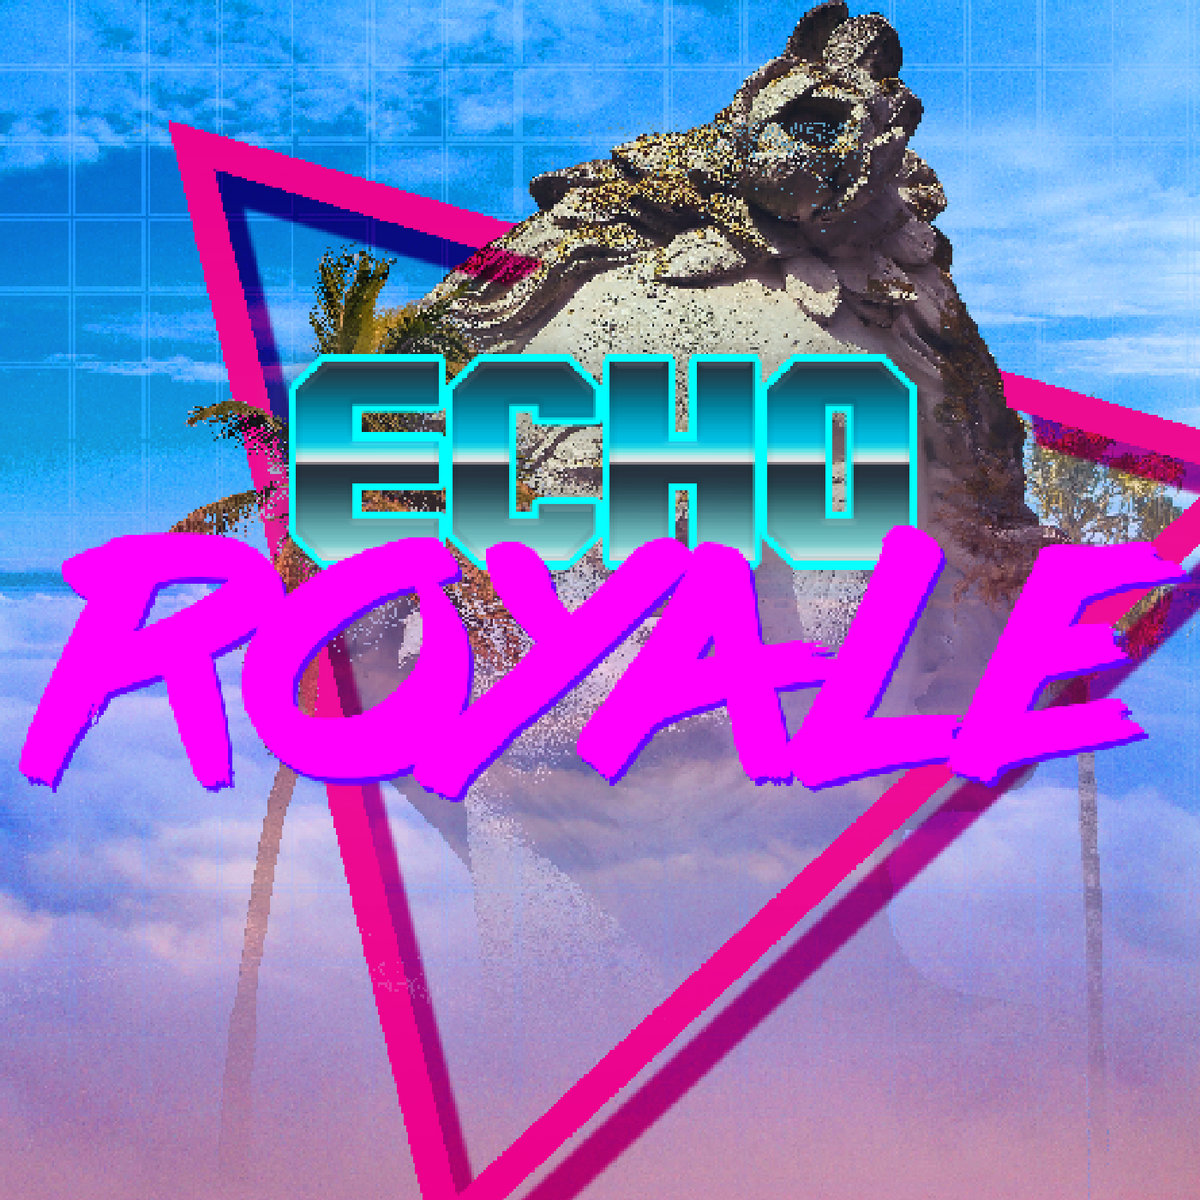 Echo Royale